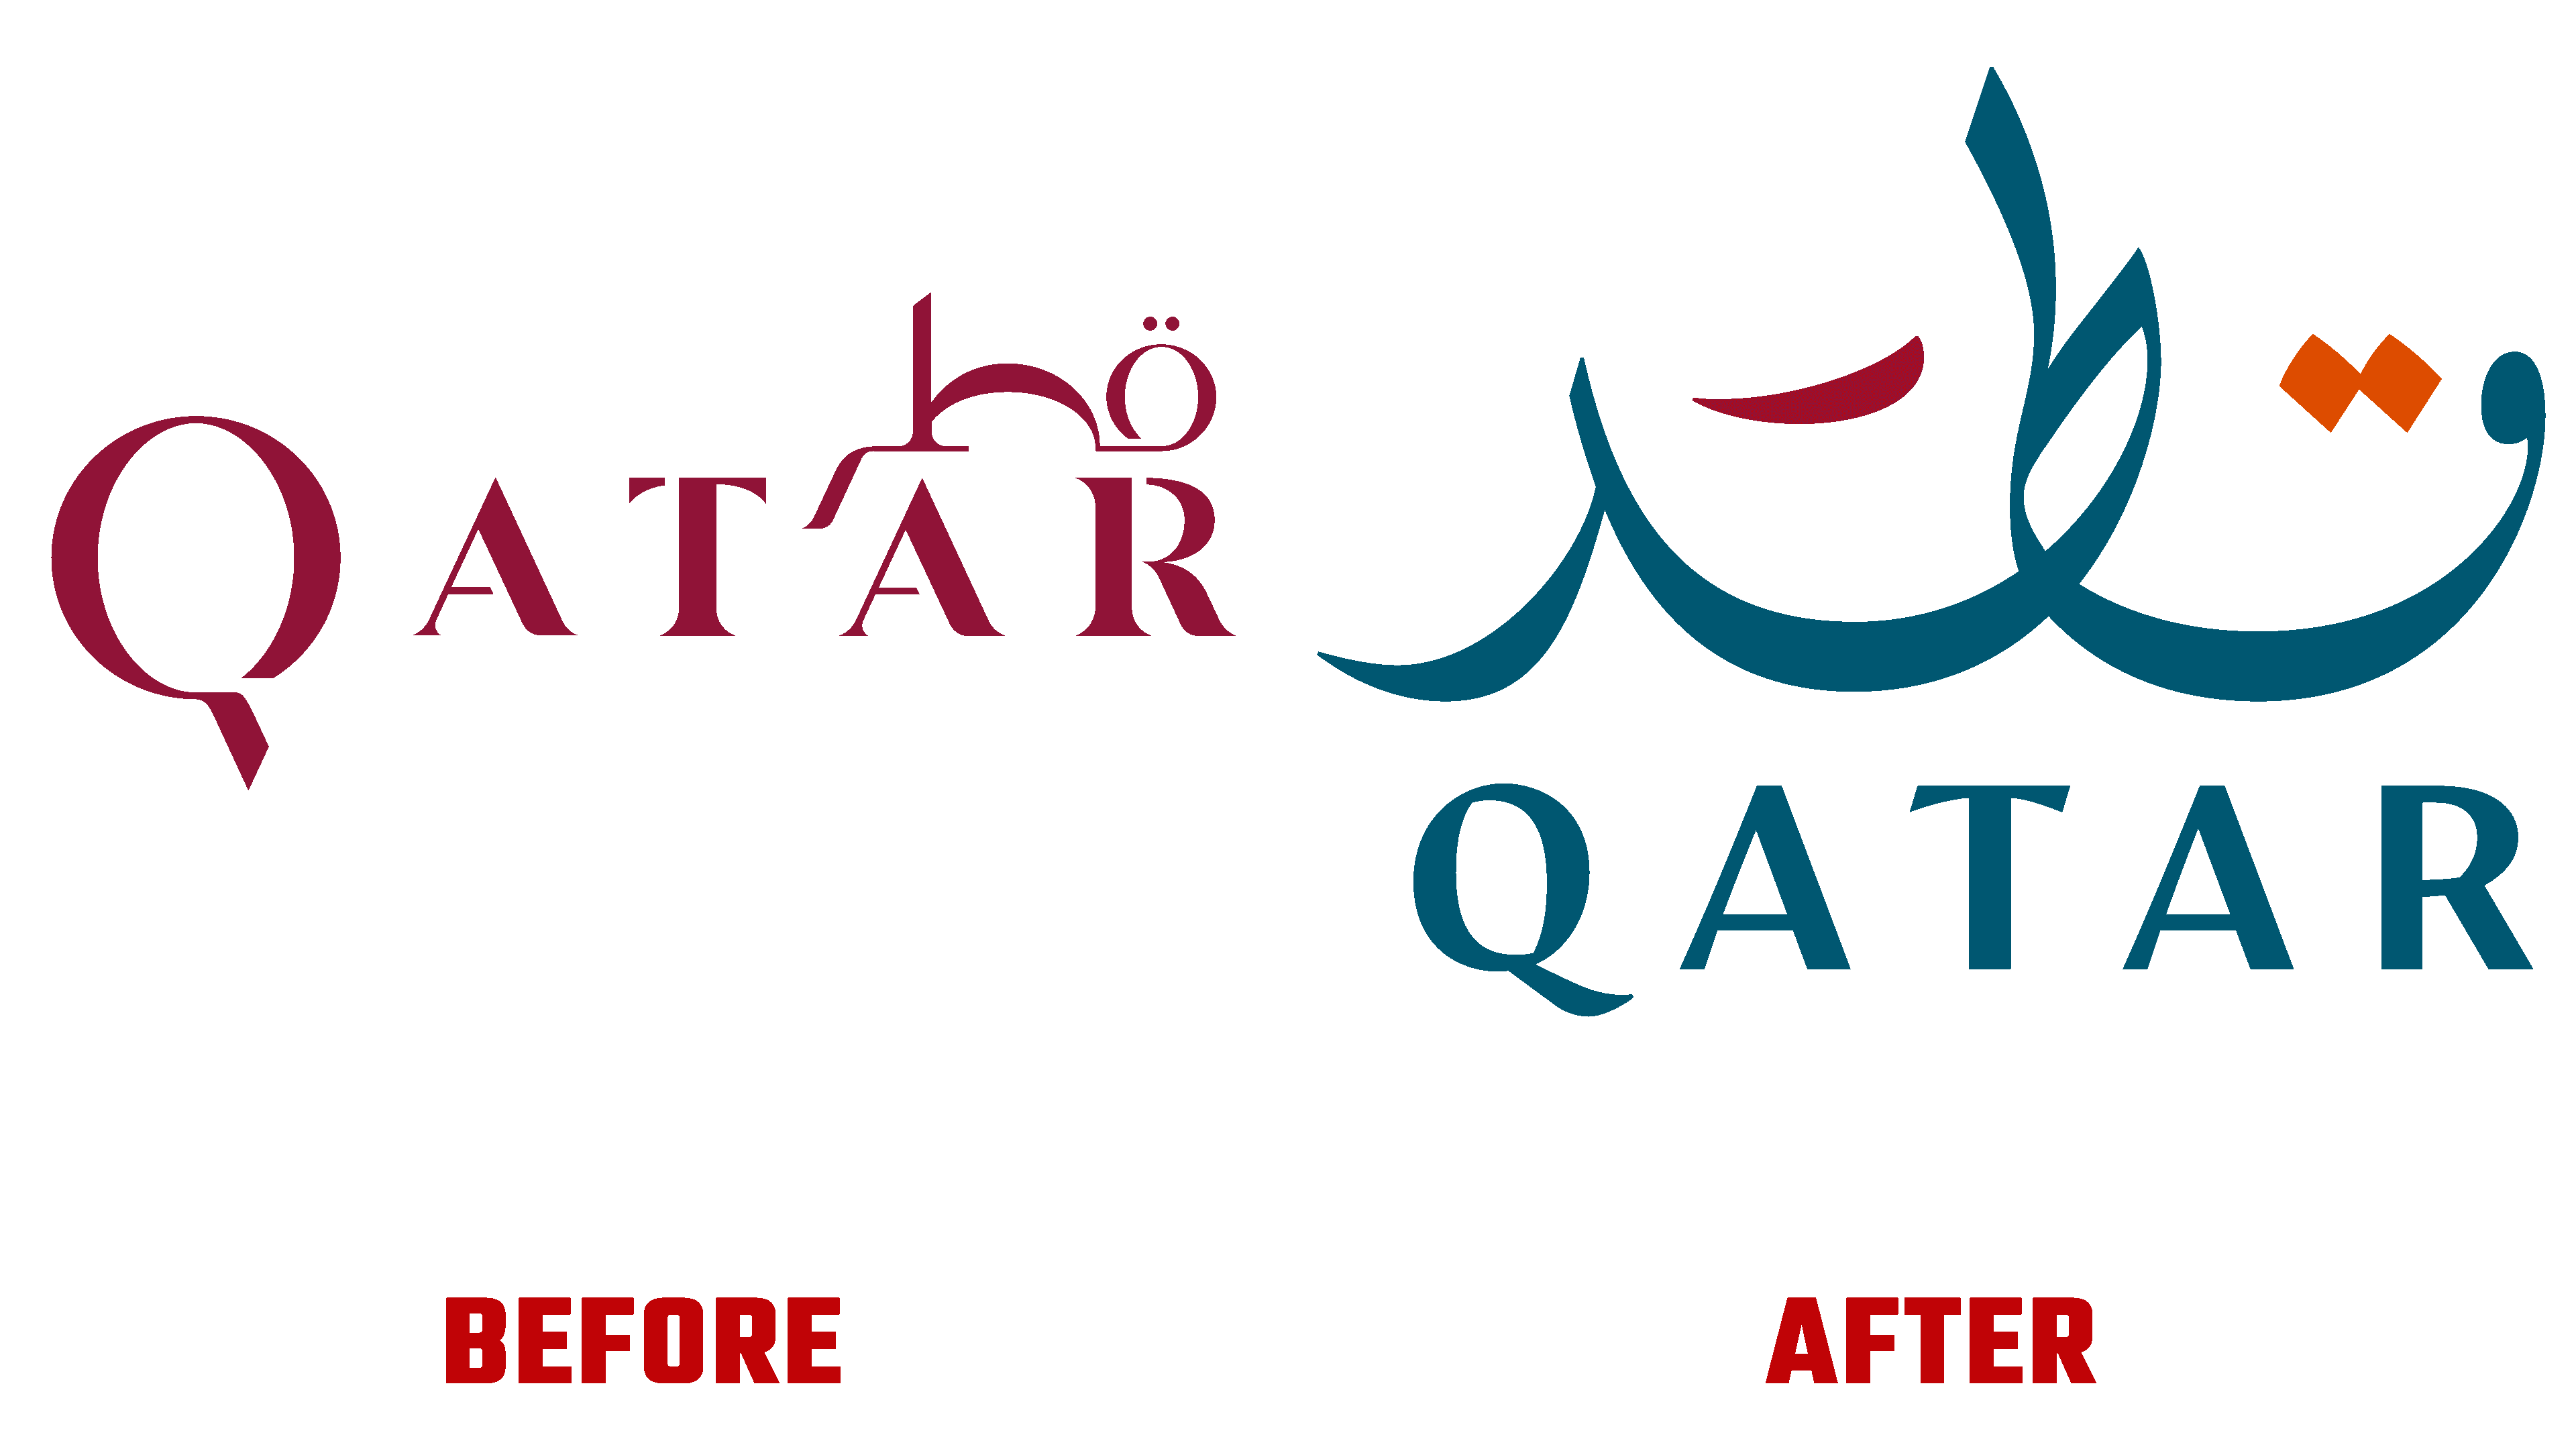 qatar national tourism council careers